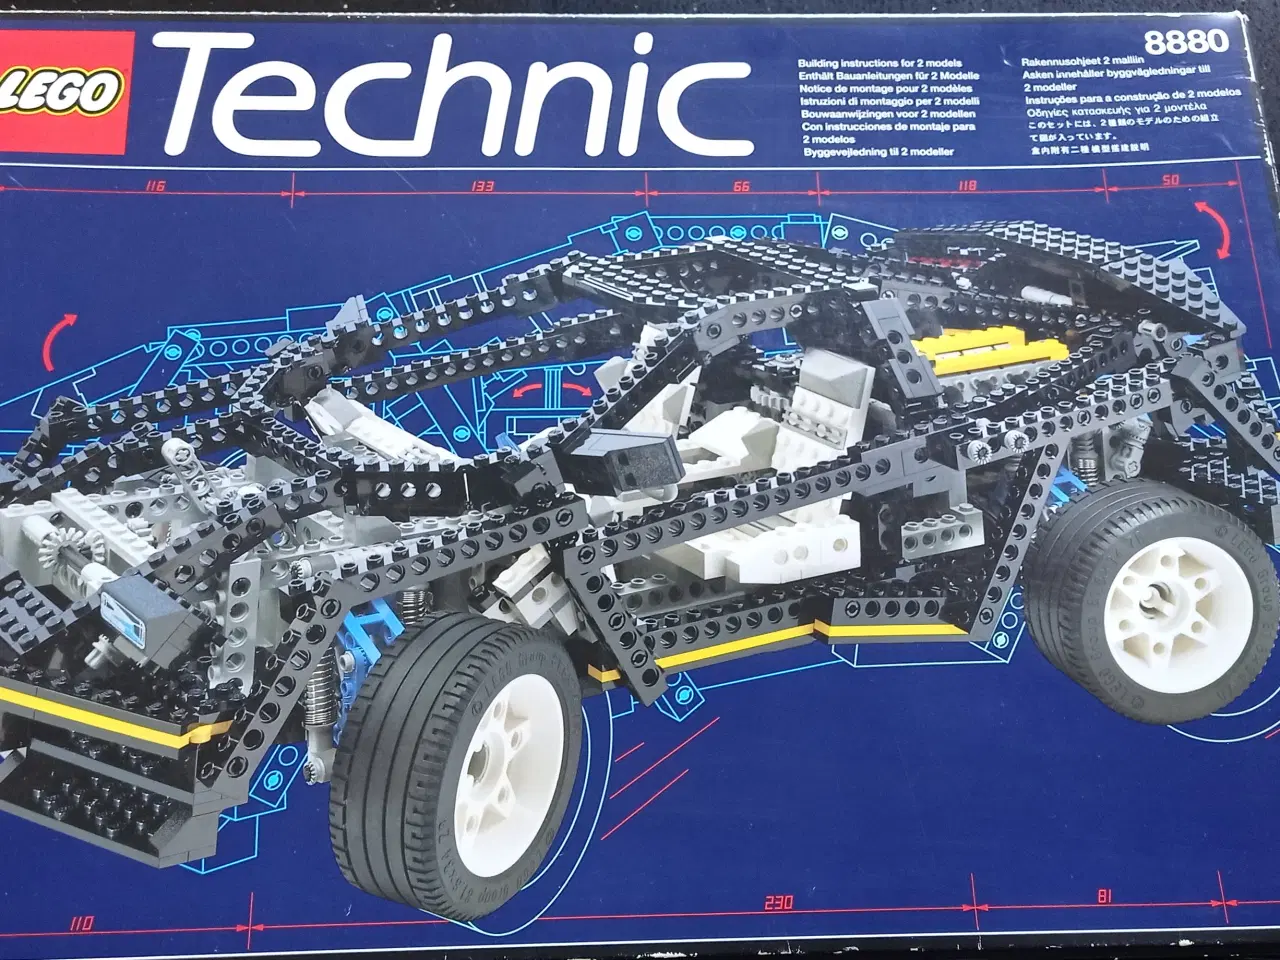 Billede 1 - Lego Technic 8880 - kom med et bud